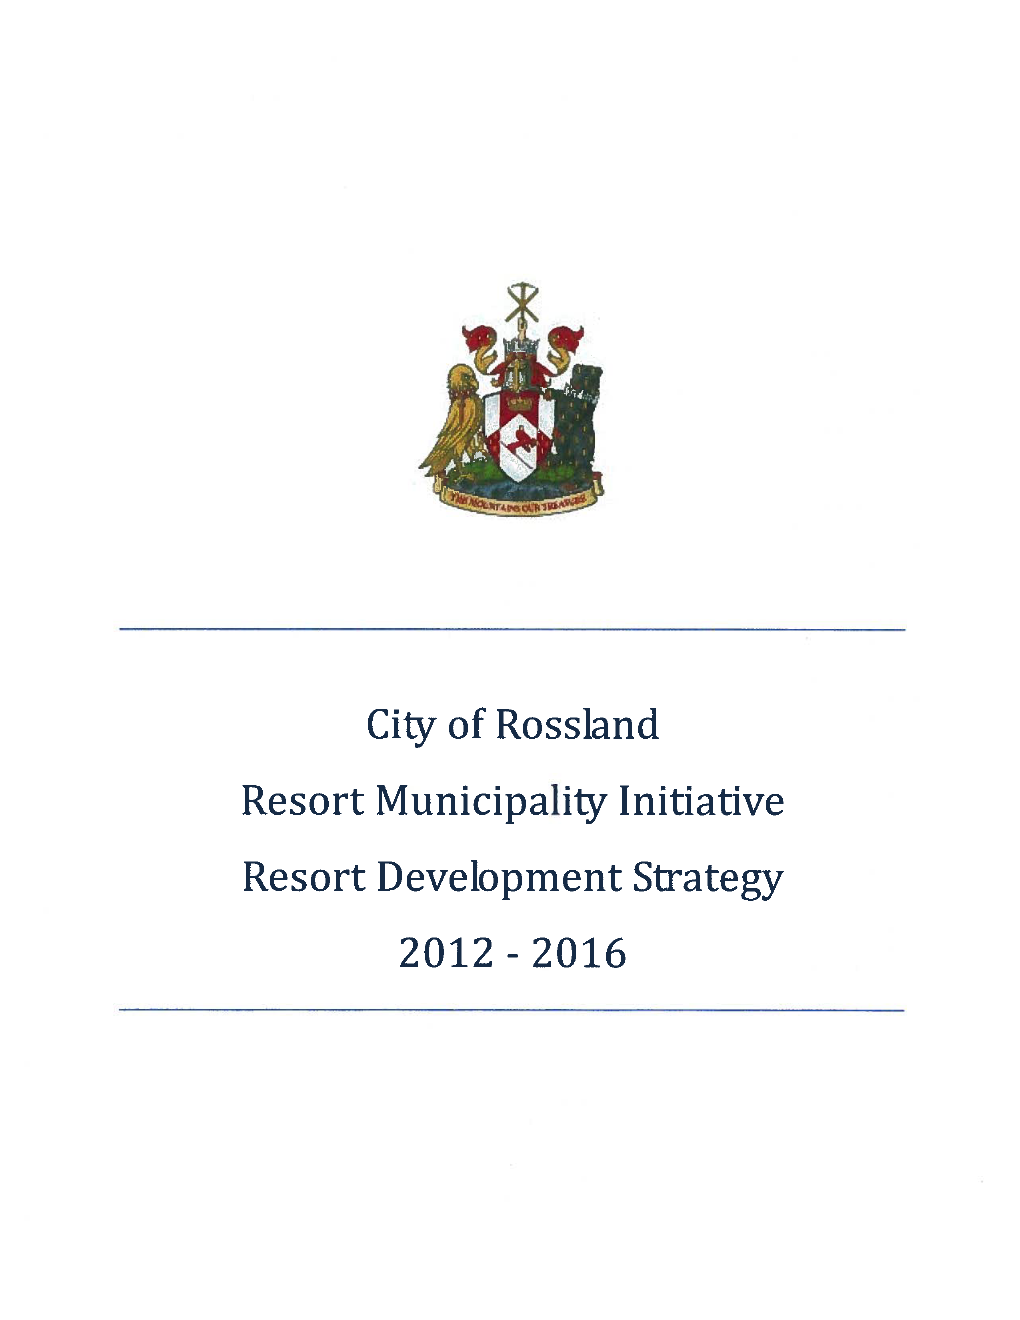 Rossland Resort Development Strategy